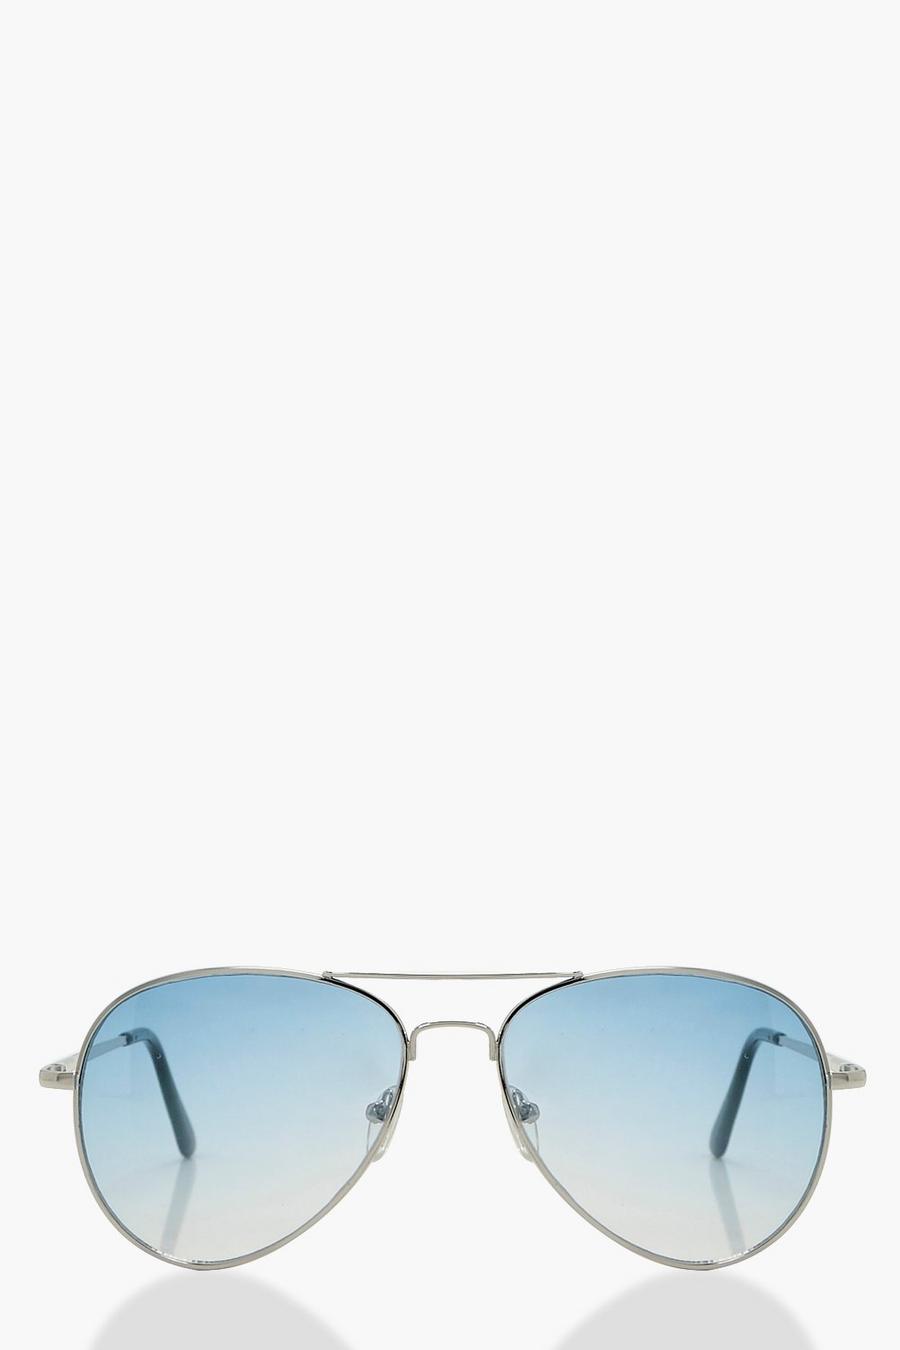 Blue Tint Aviator Sunglasses image number 1